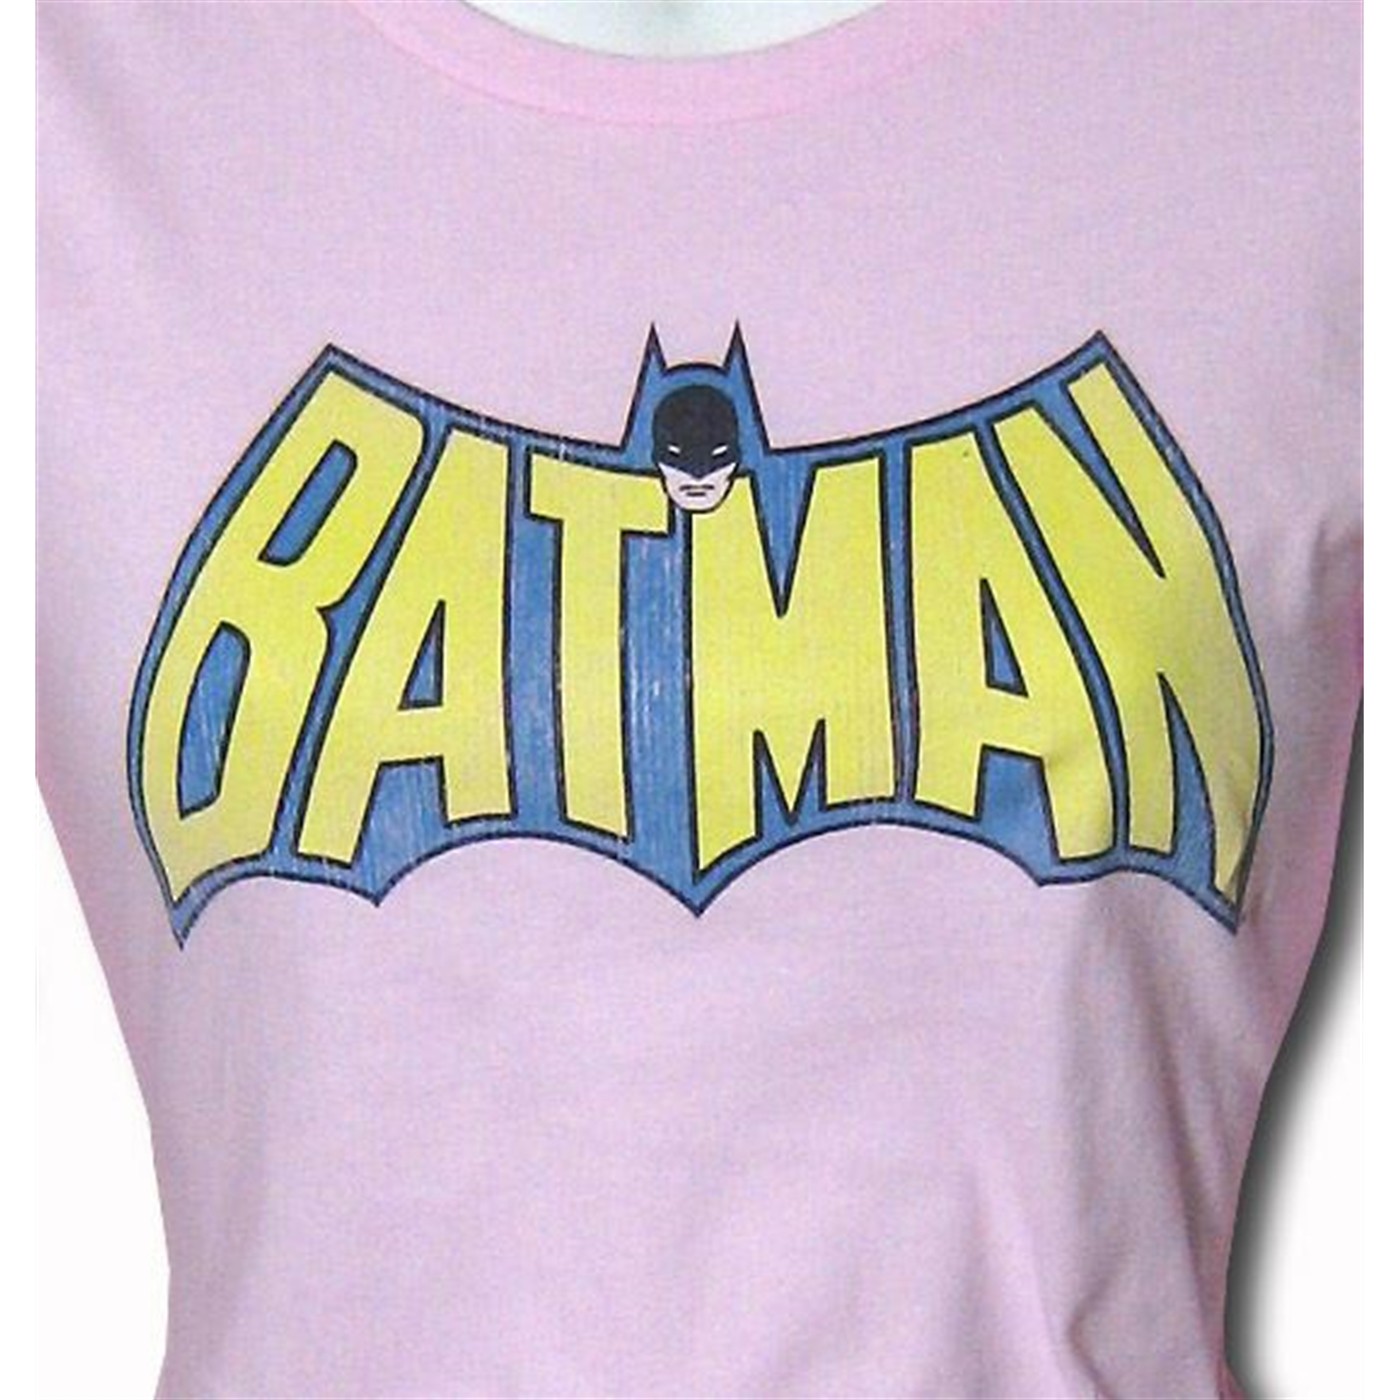 Batman Women's Classic Logo Pink Long Sleeve T-Shirt